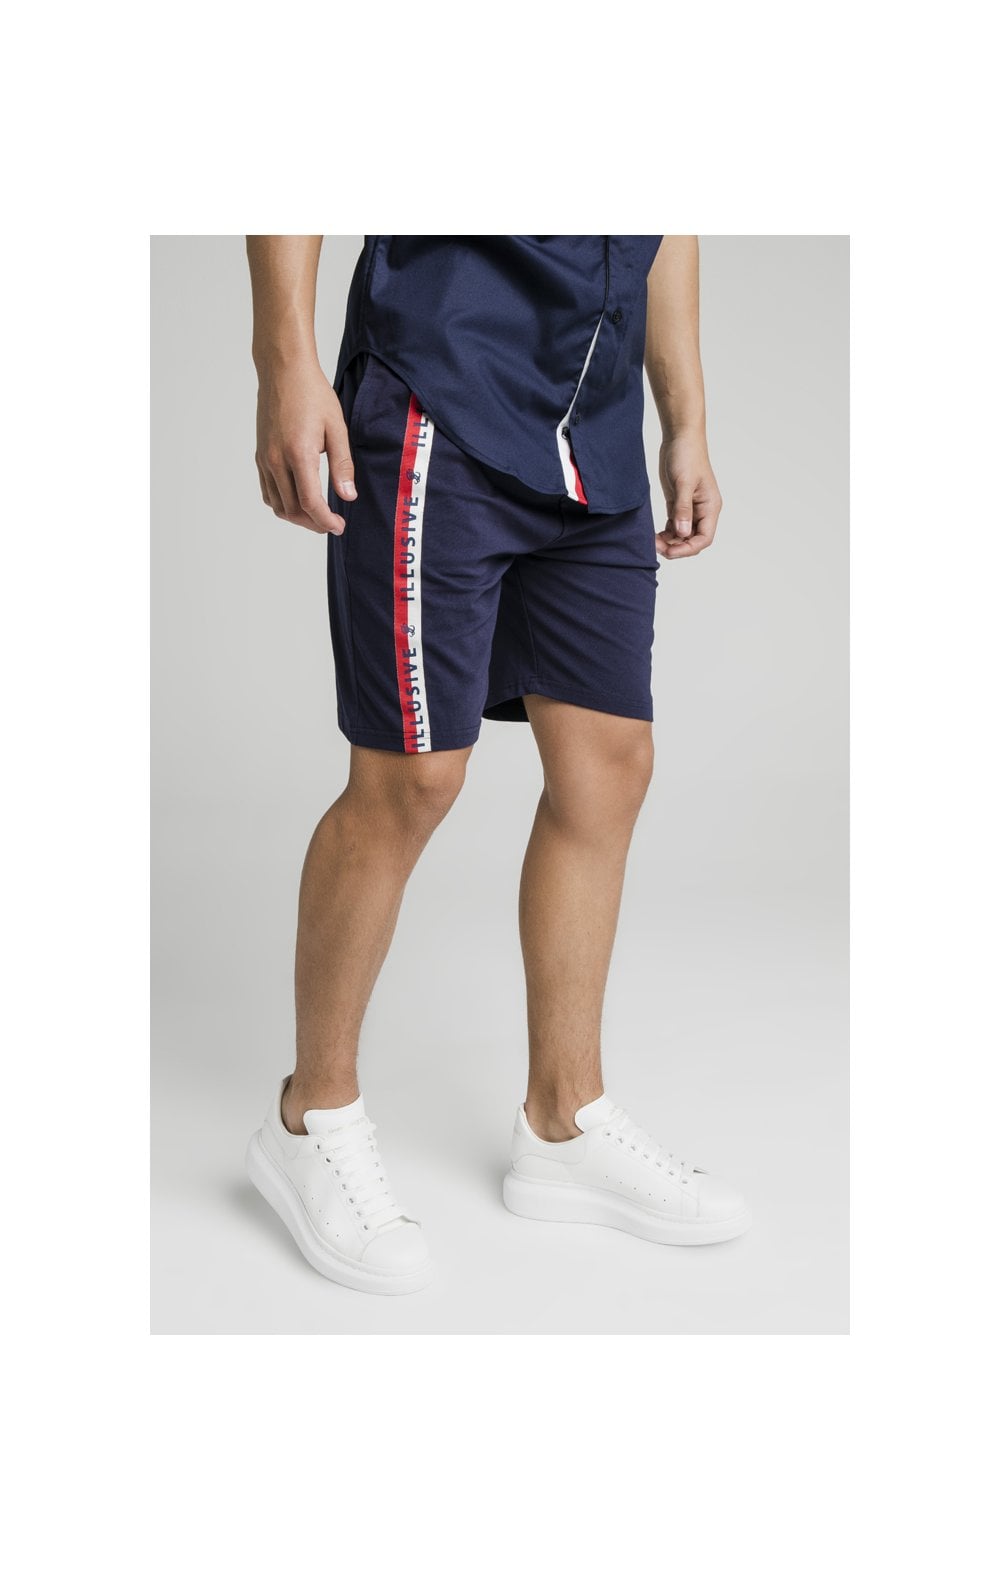 Illusive London Side Tape Jersey Shorts - Navy (1)